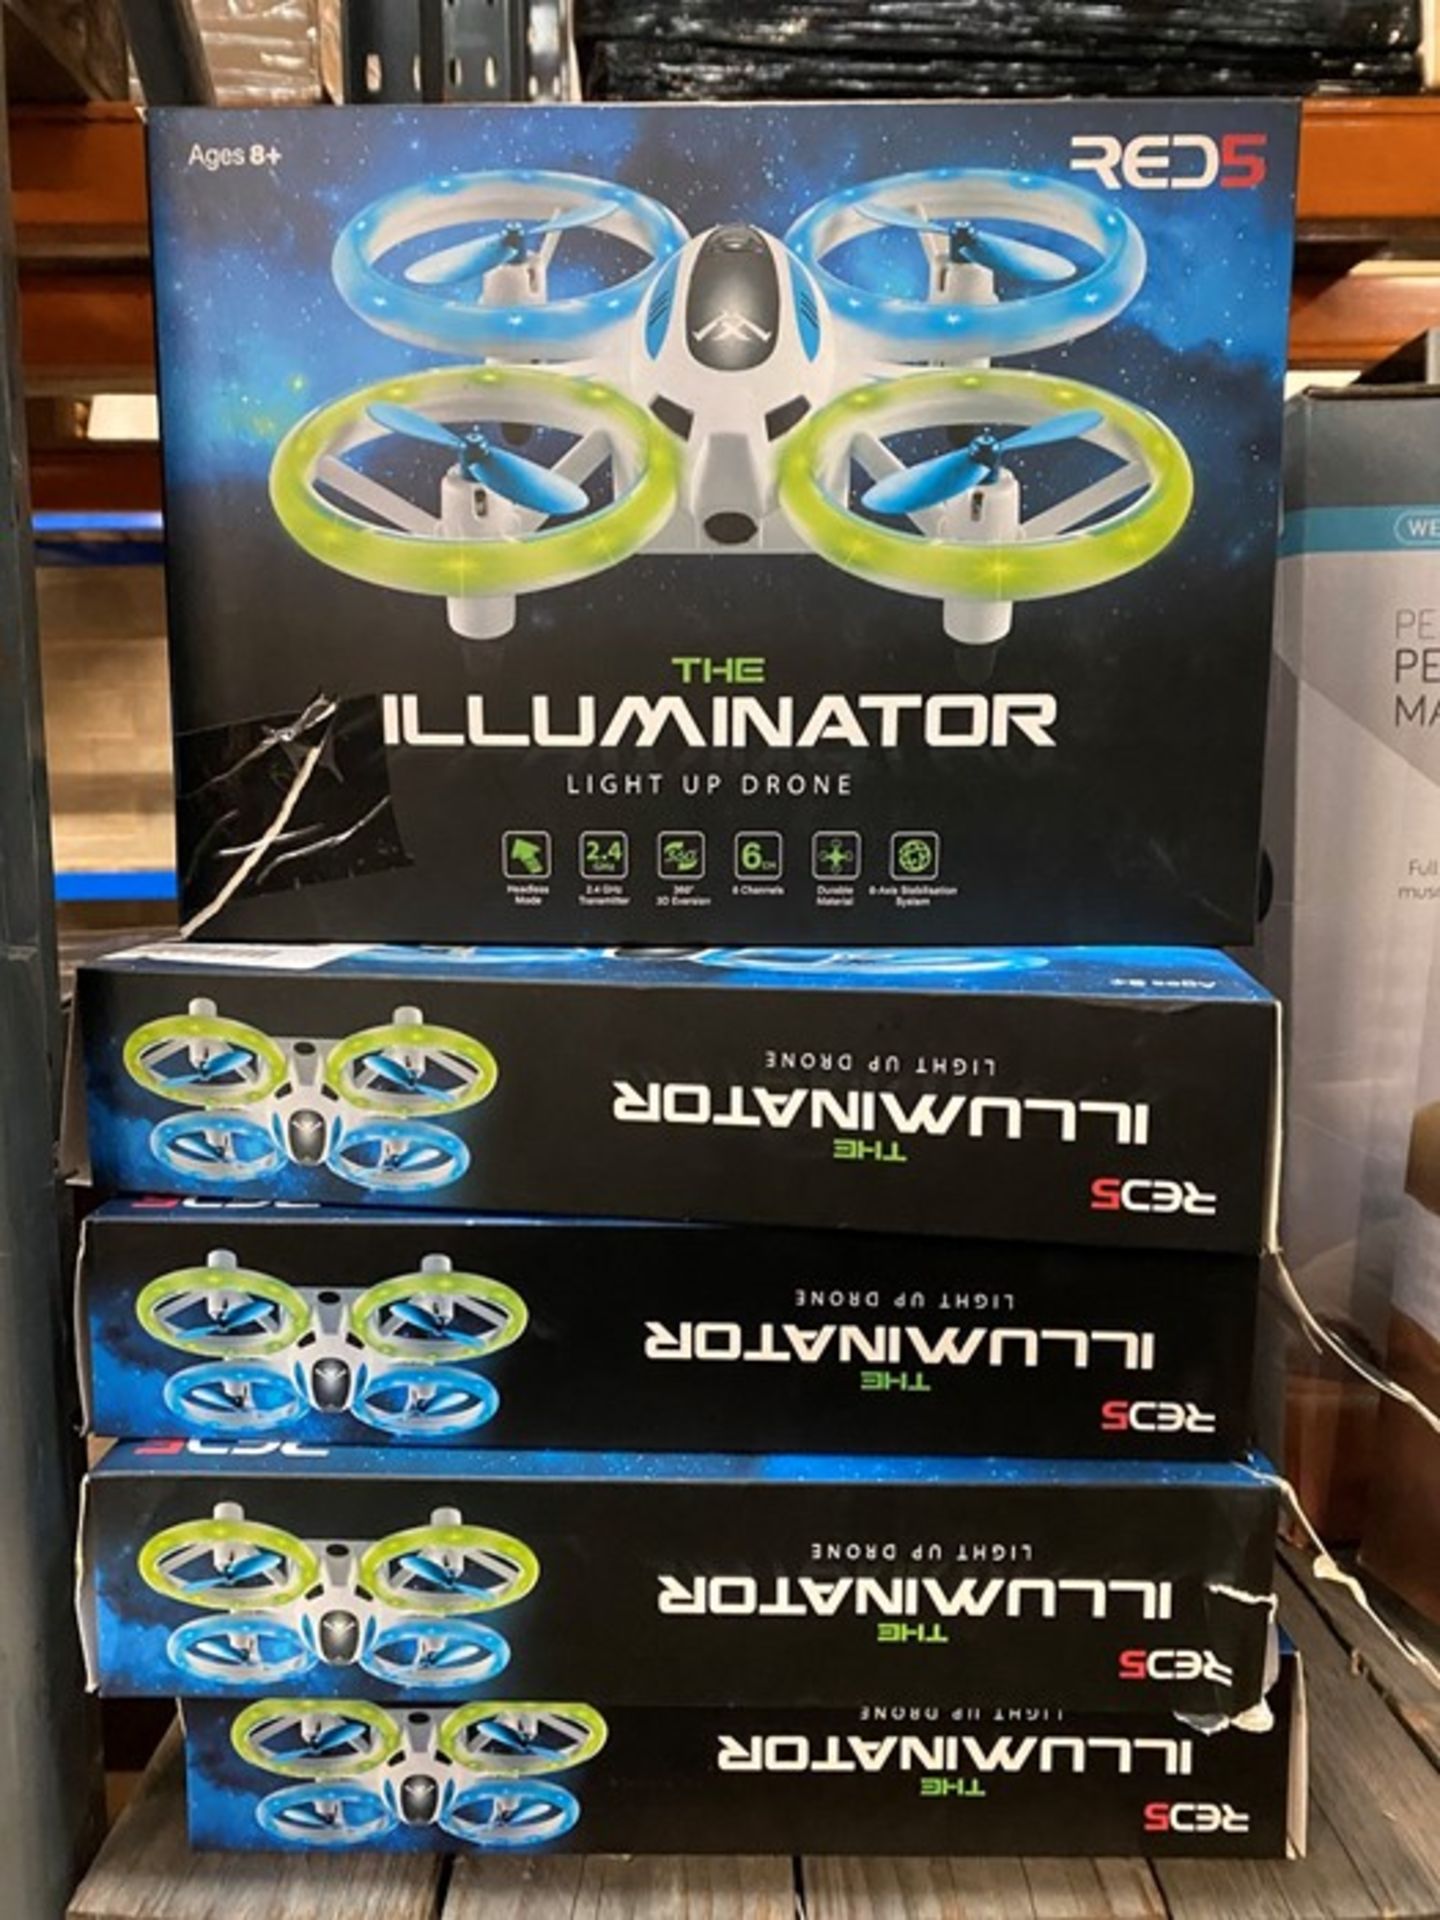 15 X THE ILLUMINATOR LIGHT UP DRONE RRP £300.00 UNTESTED CUSTOMER RETURNS